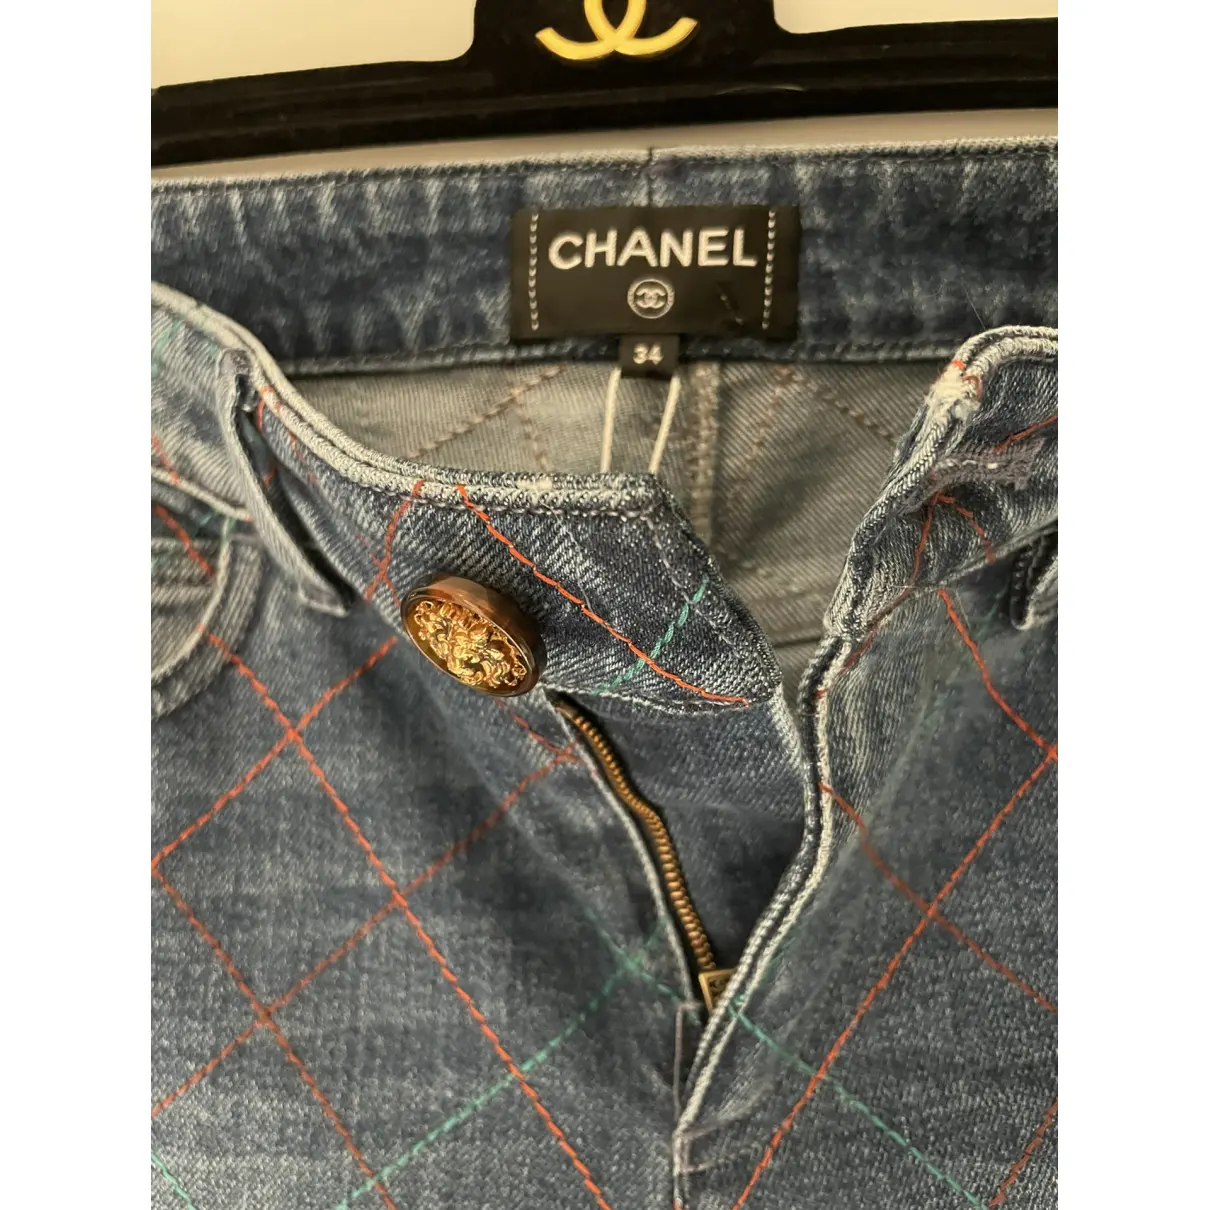 Buy Chanel Slim jeans online